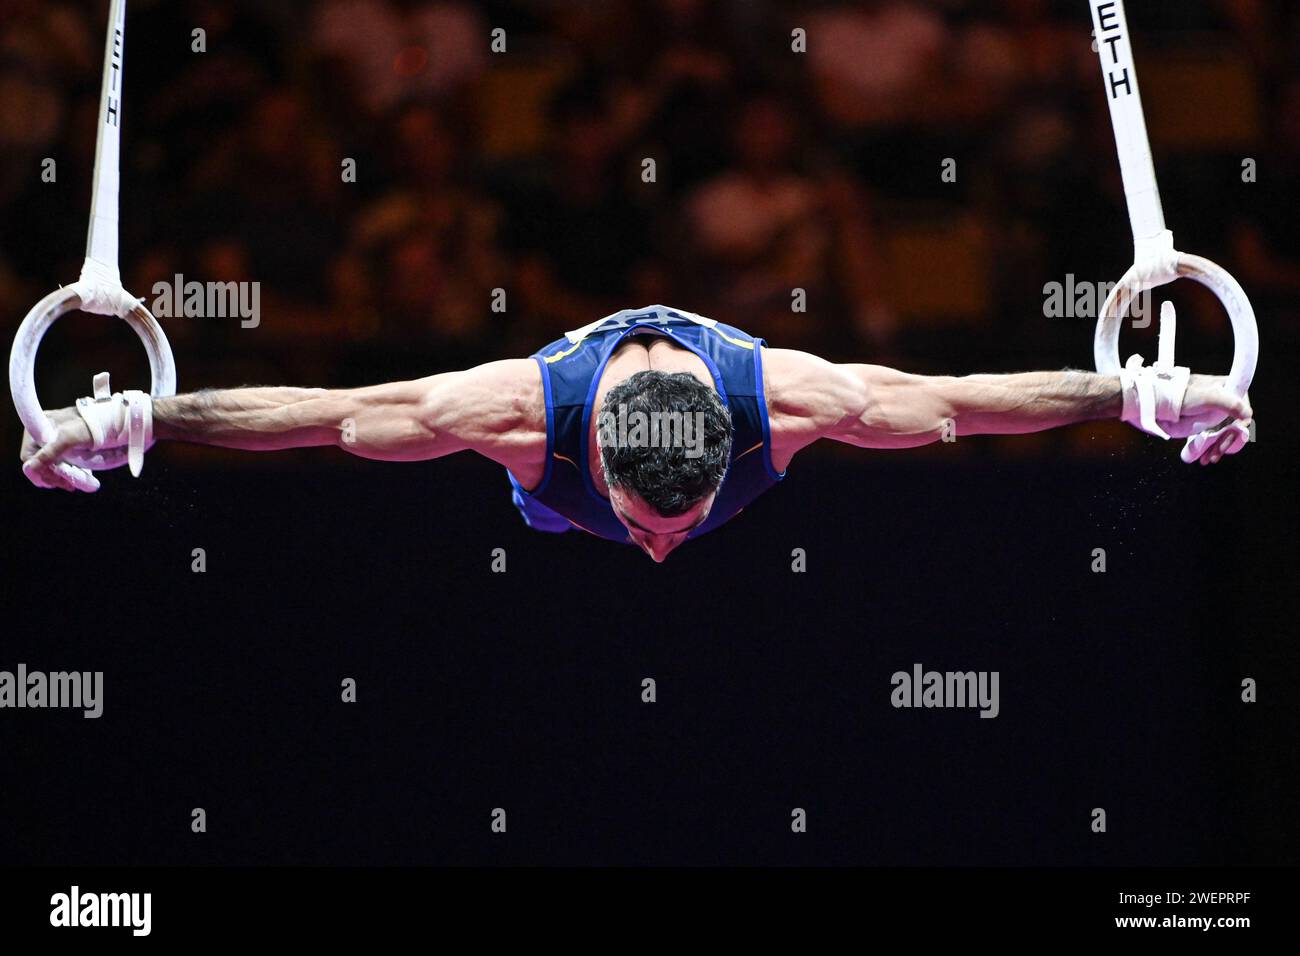 Vahagn Davtyan (Armenia). European Championships Munich 2022: Artistic Gymnastics, Rings Men's Final. Stock Photo